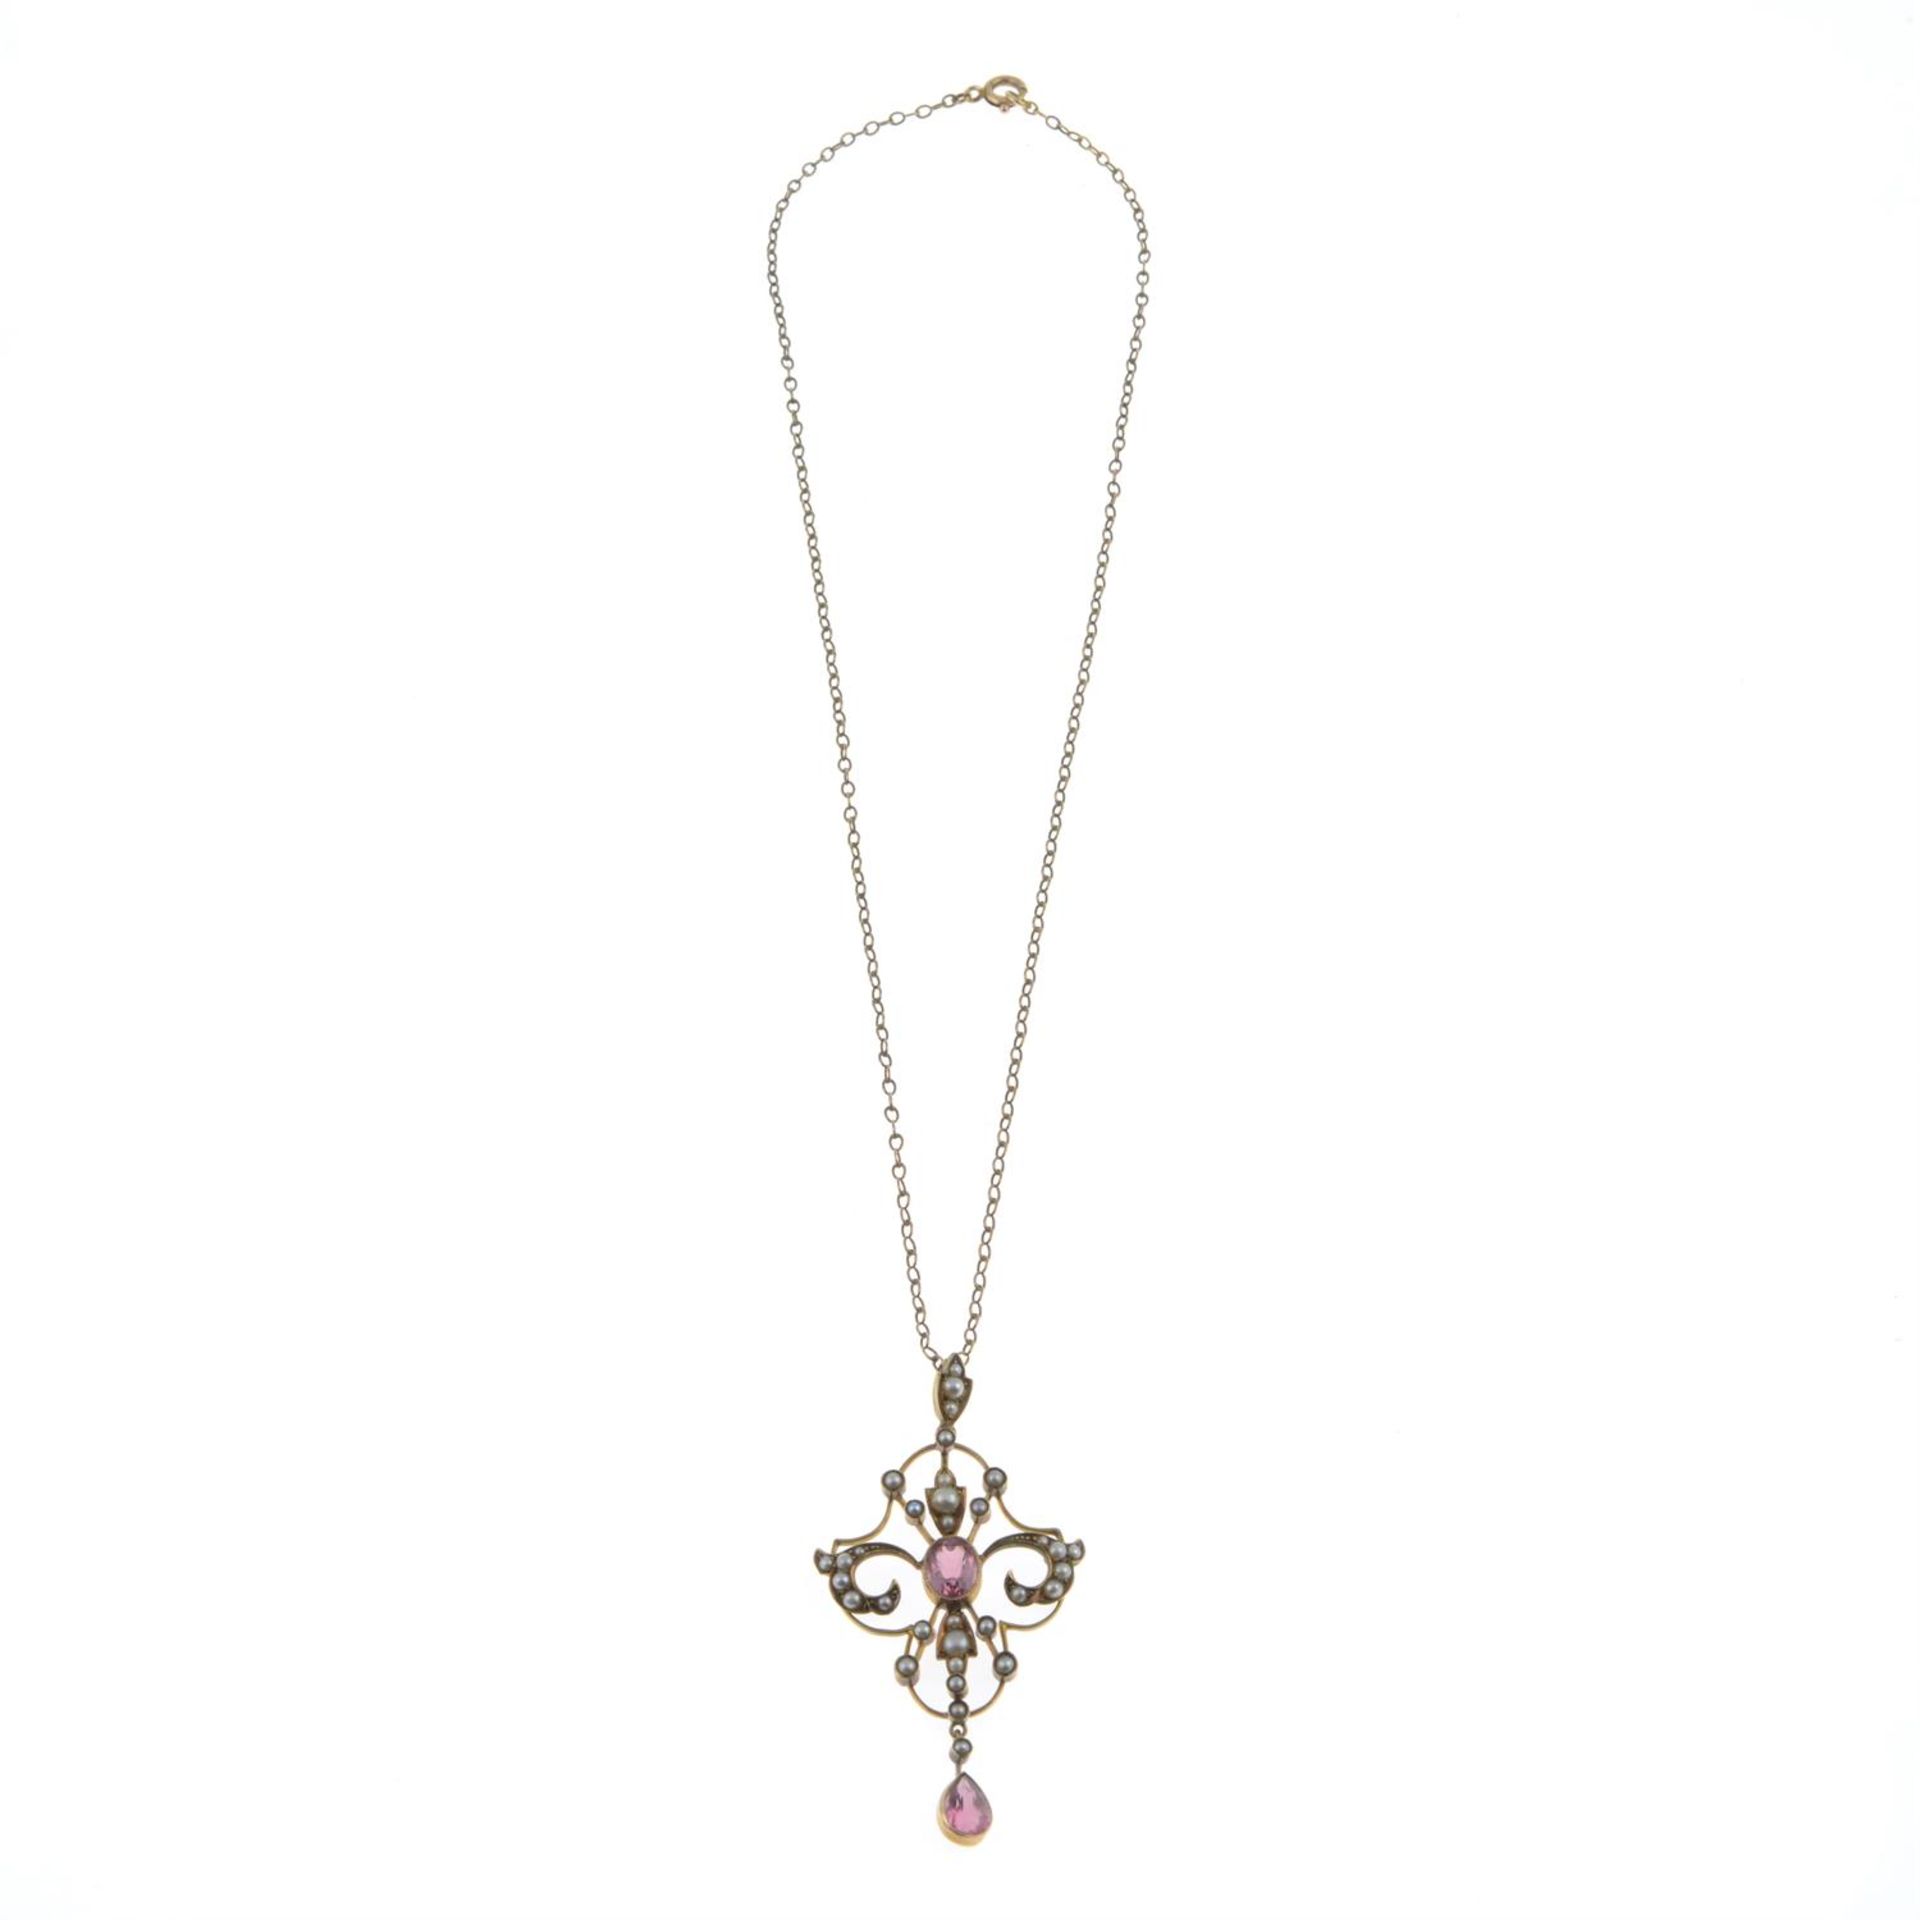 Edwardian tourmaline & split pearl pendant & chain - Image 2 of 2